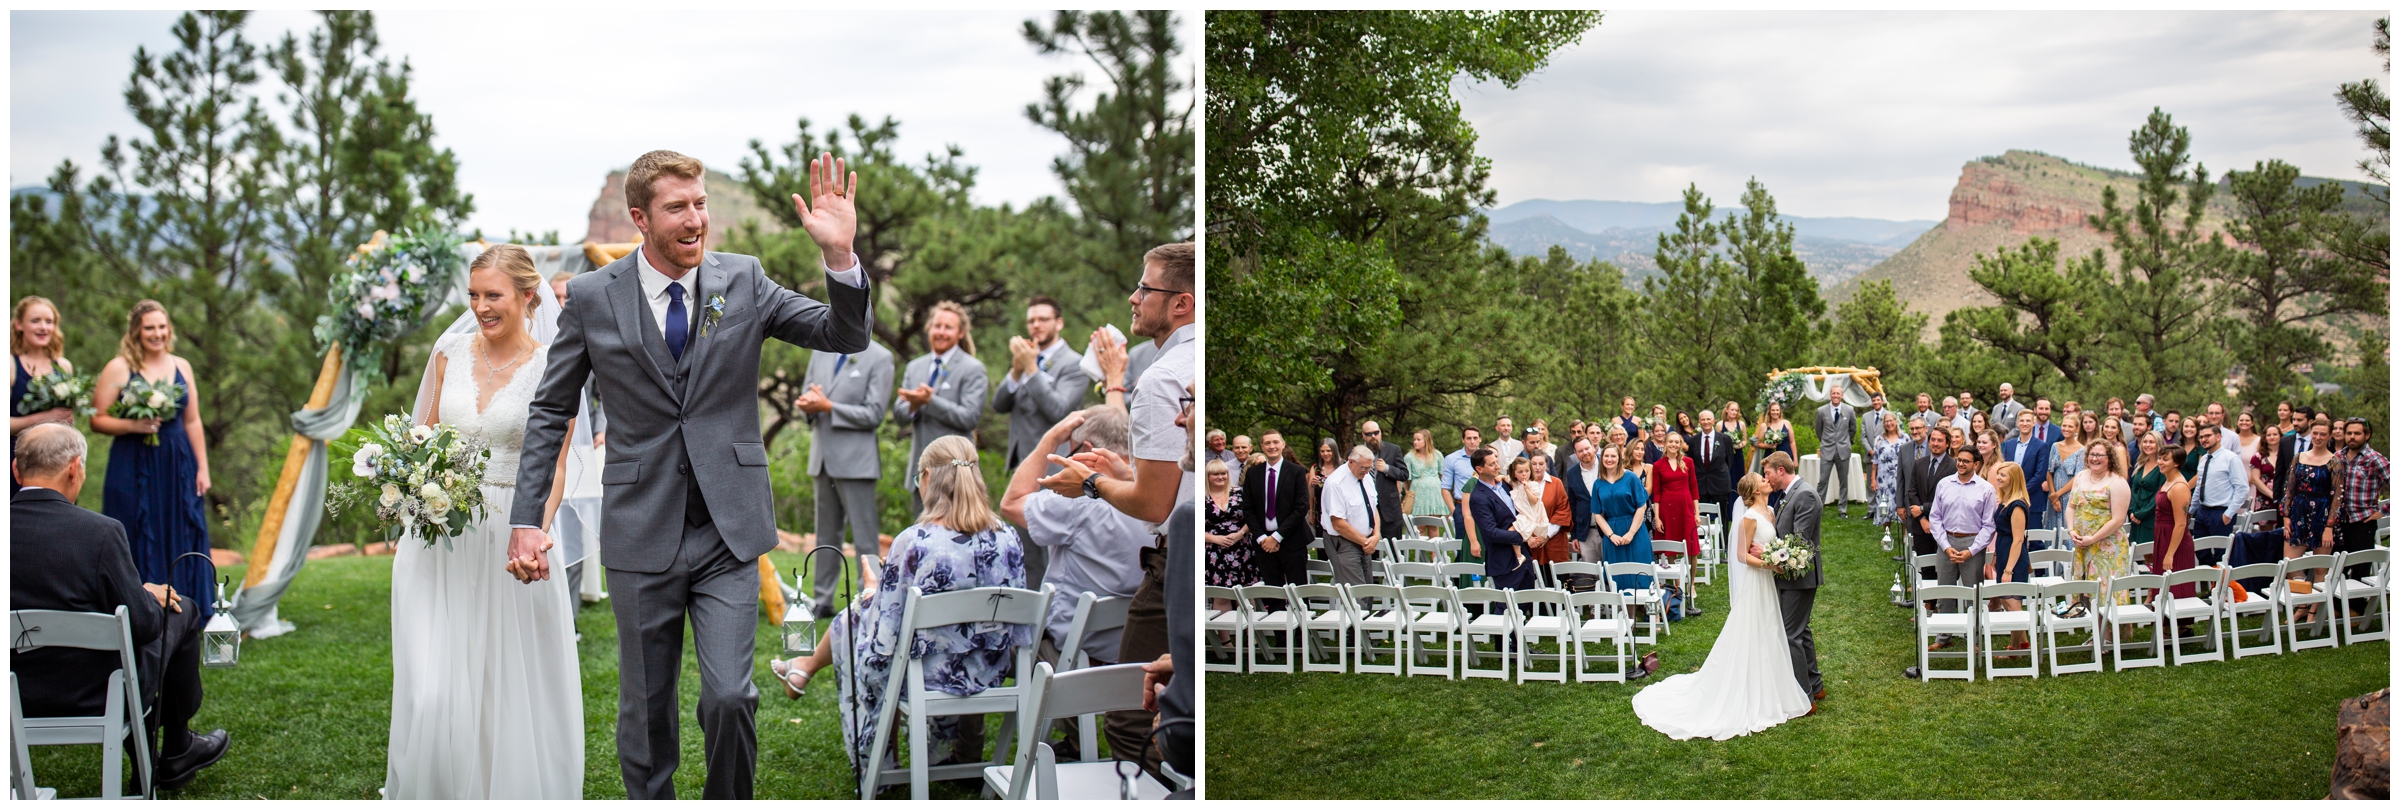 summer wedding ceremony at Lionscrest Manor in Lyons Colorado